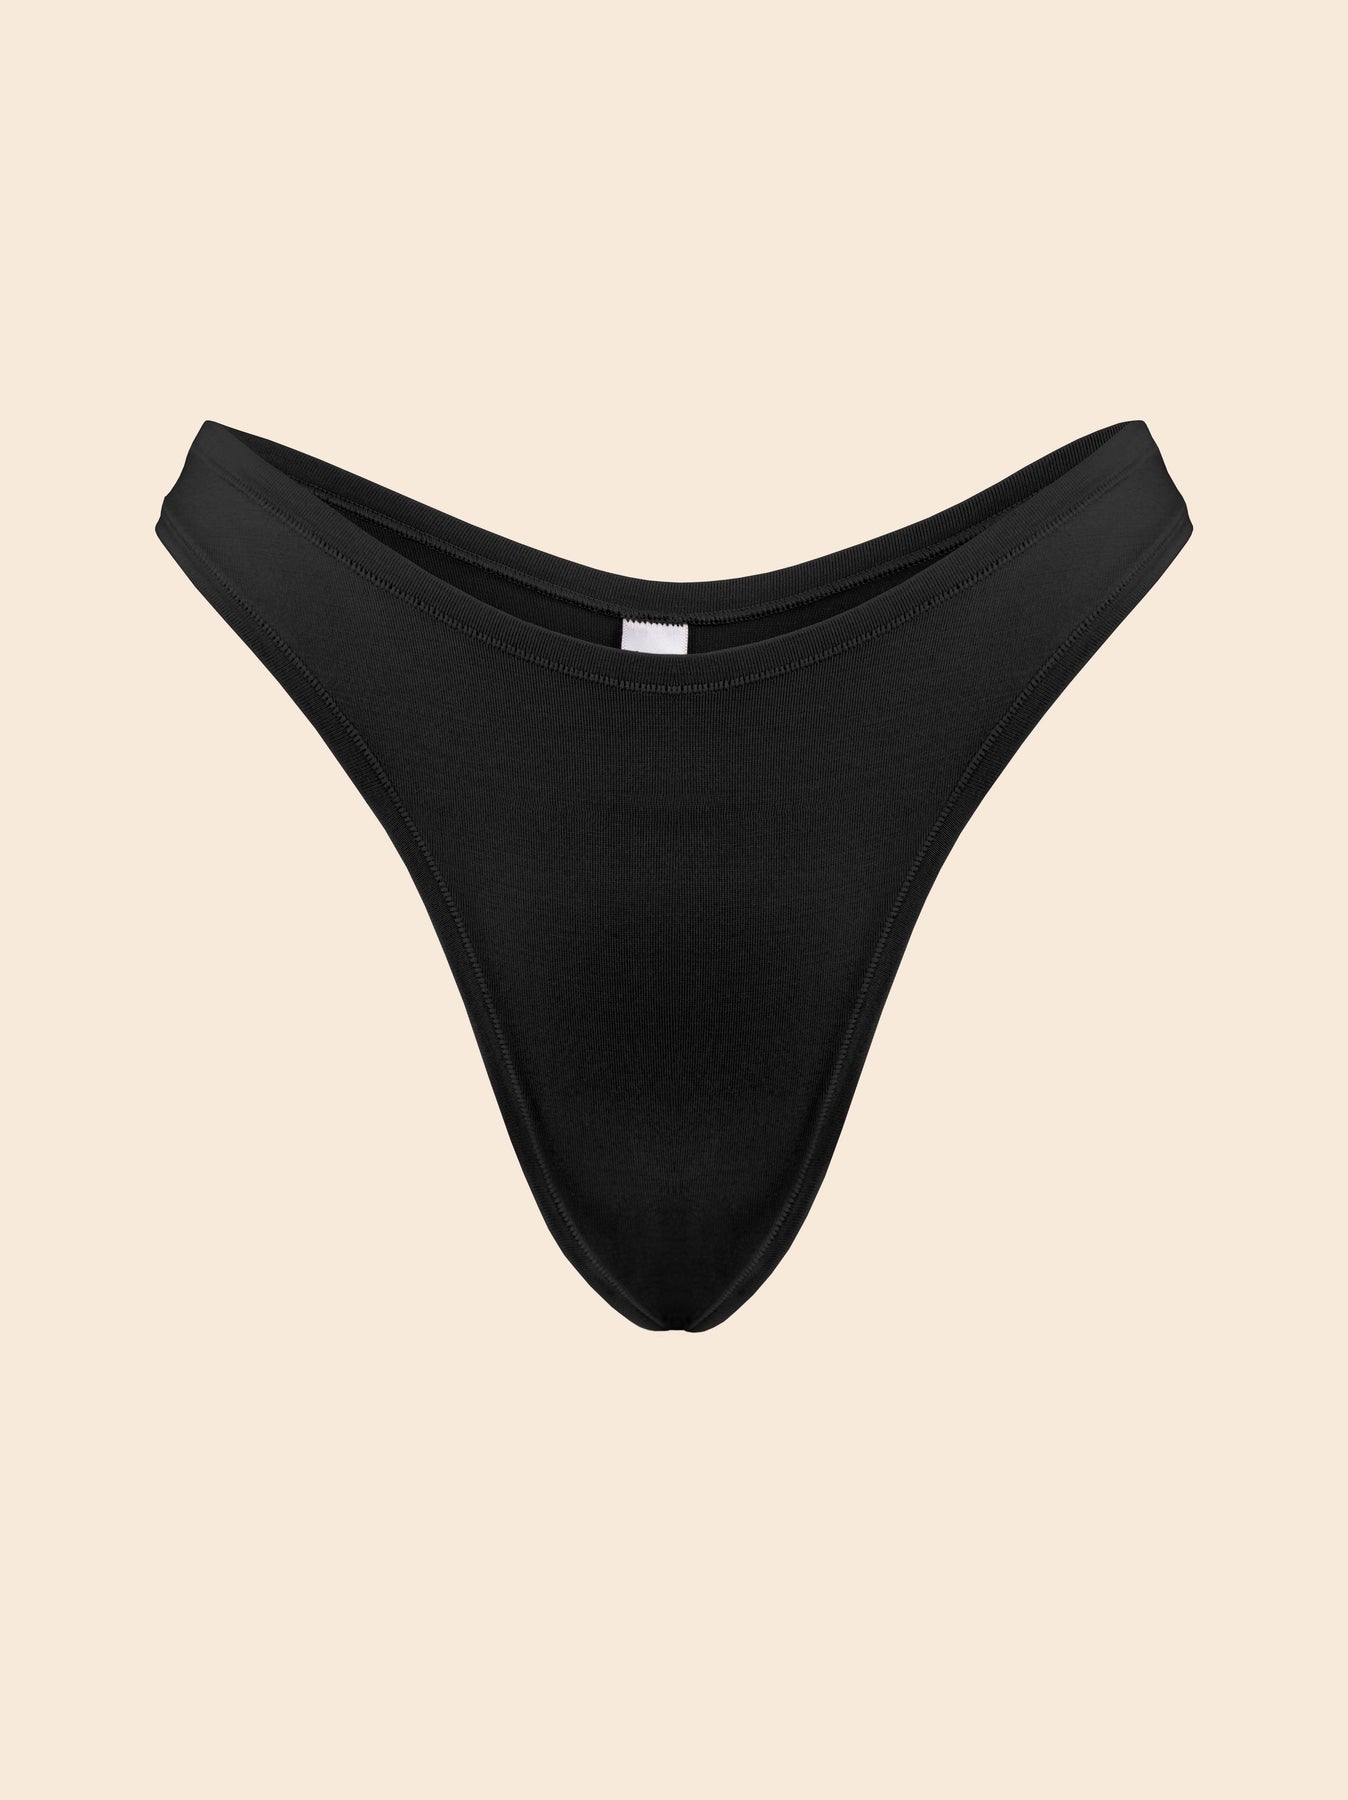 Dainese Quick Dry Woman Panties Black DA19100003-001 Underwear